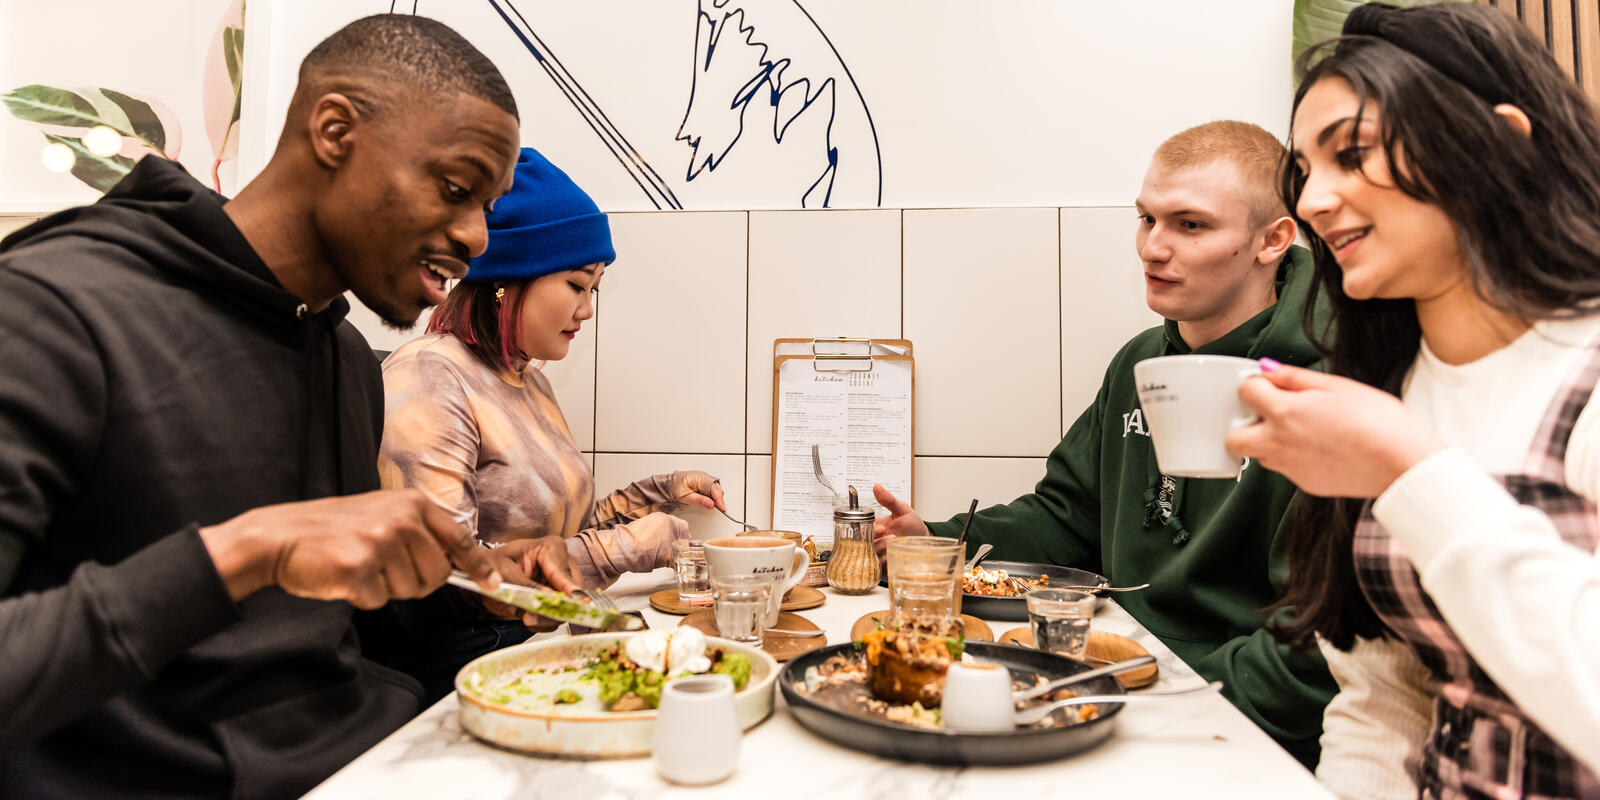 Students eating food together